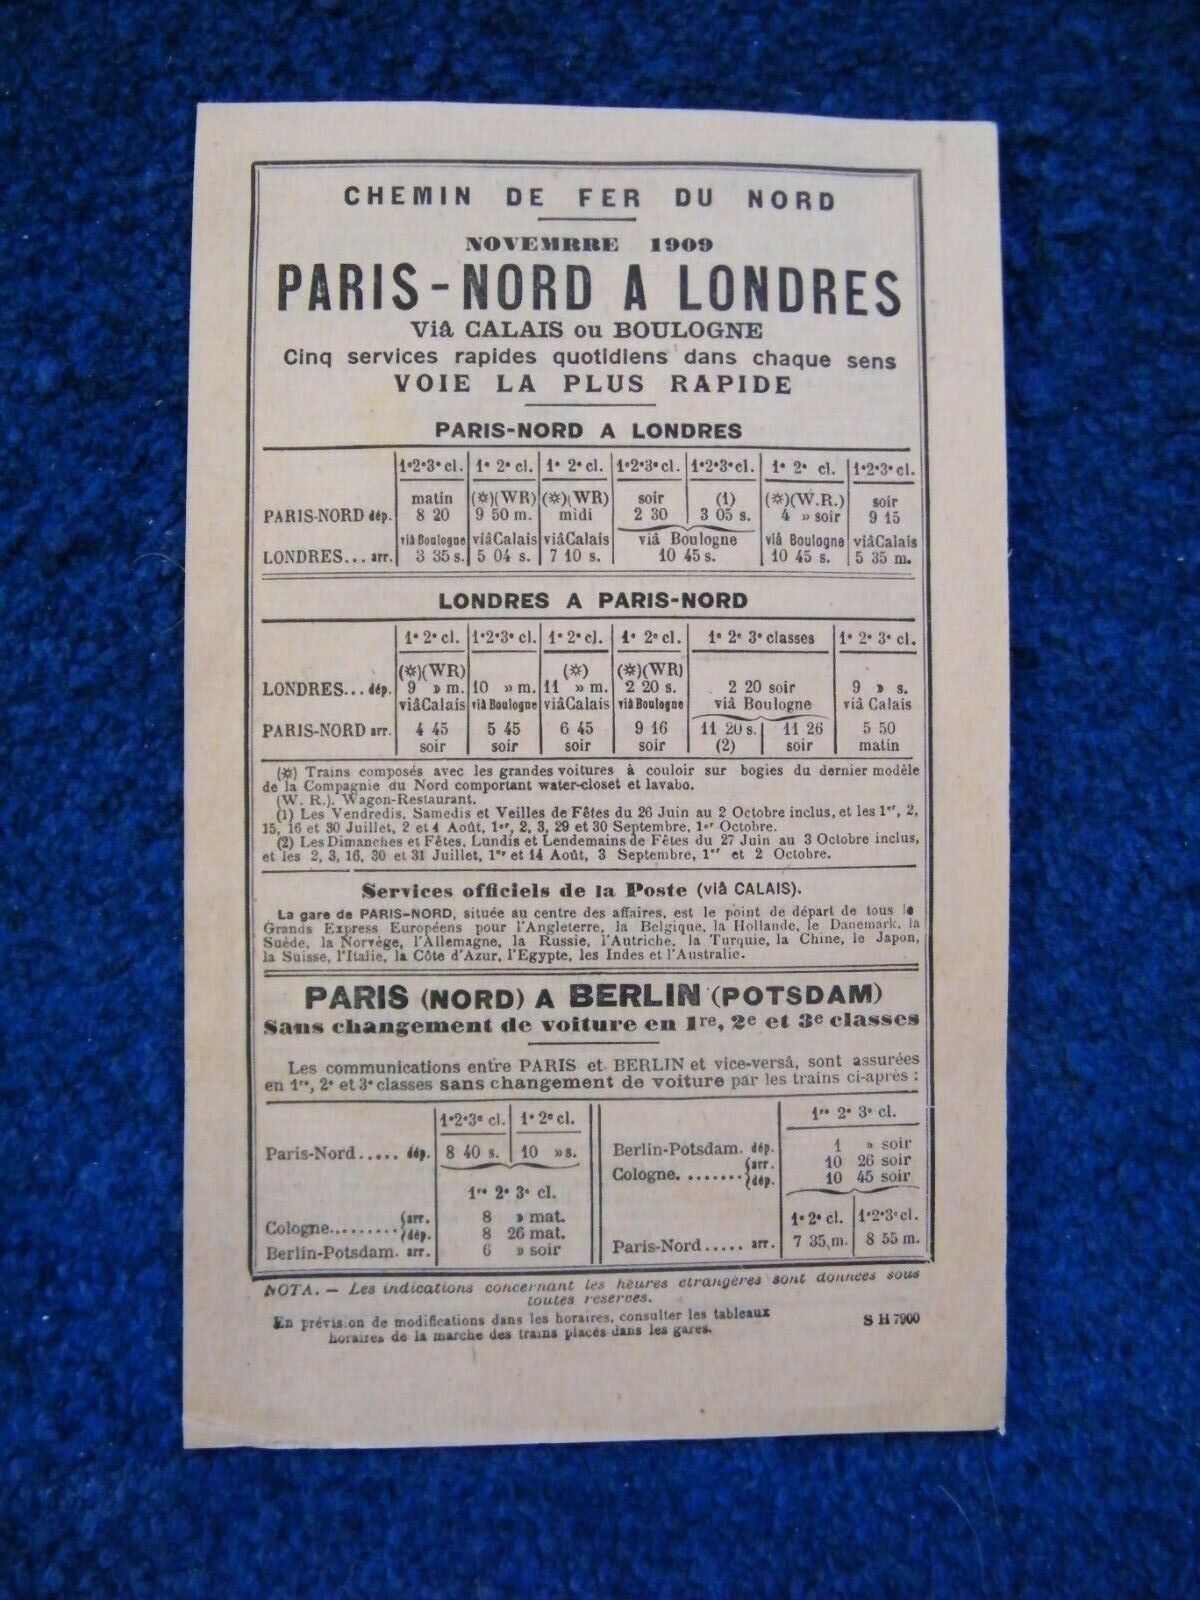 Original 1909 Chemin De Fer Du Nord Paris to London & Berlin Timetable Brochure